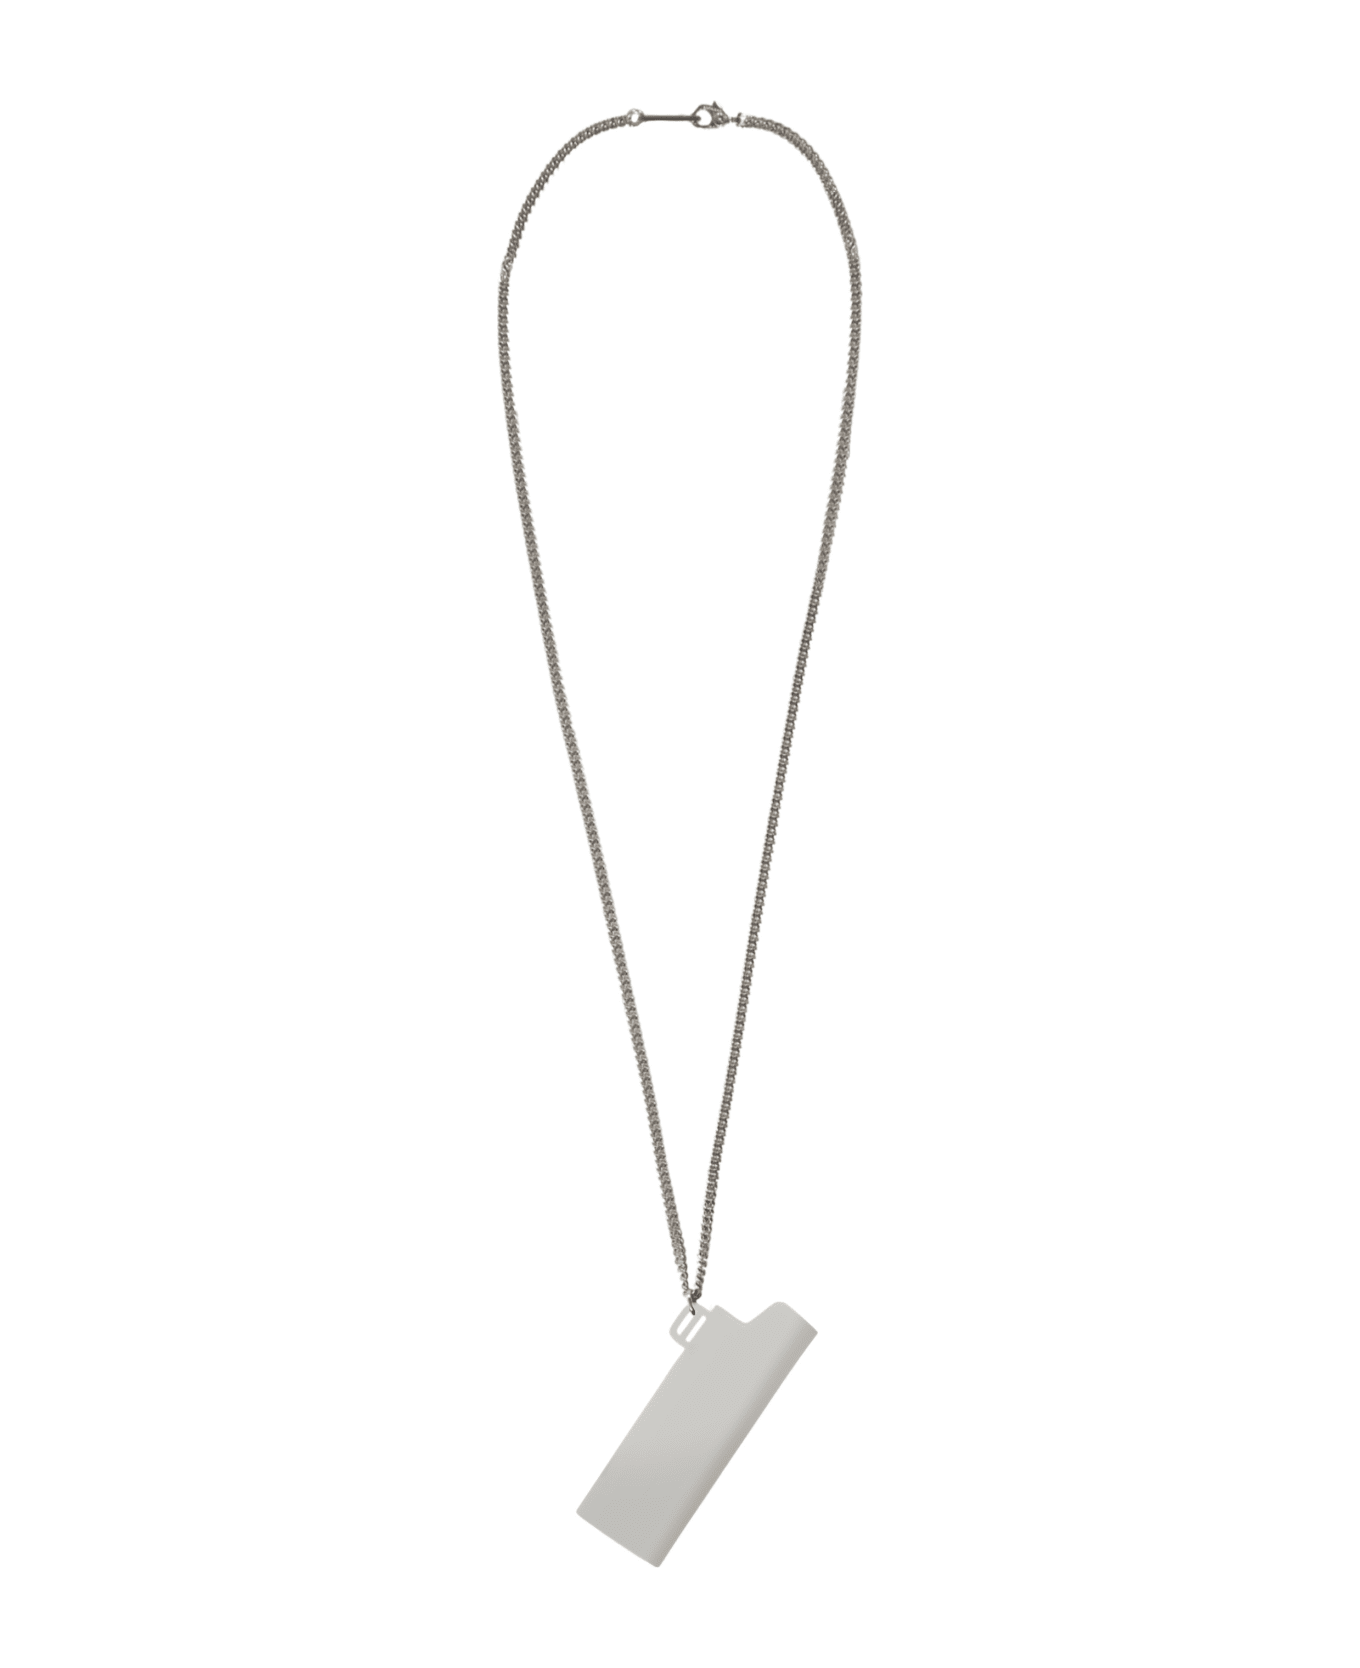 AMBUSH Lighter Case Necklace - White